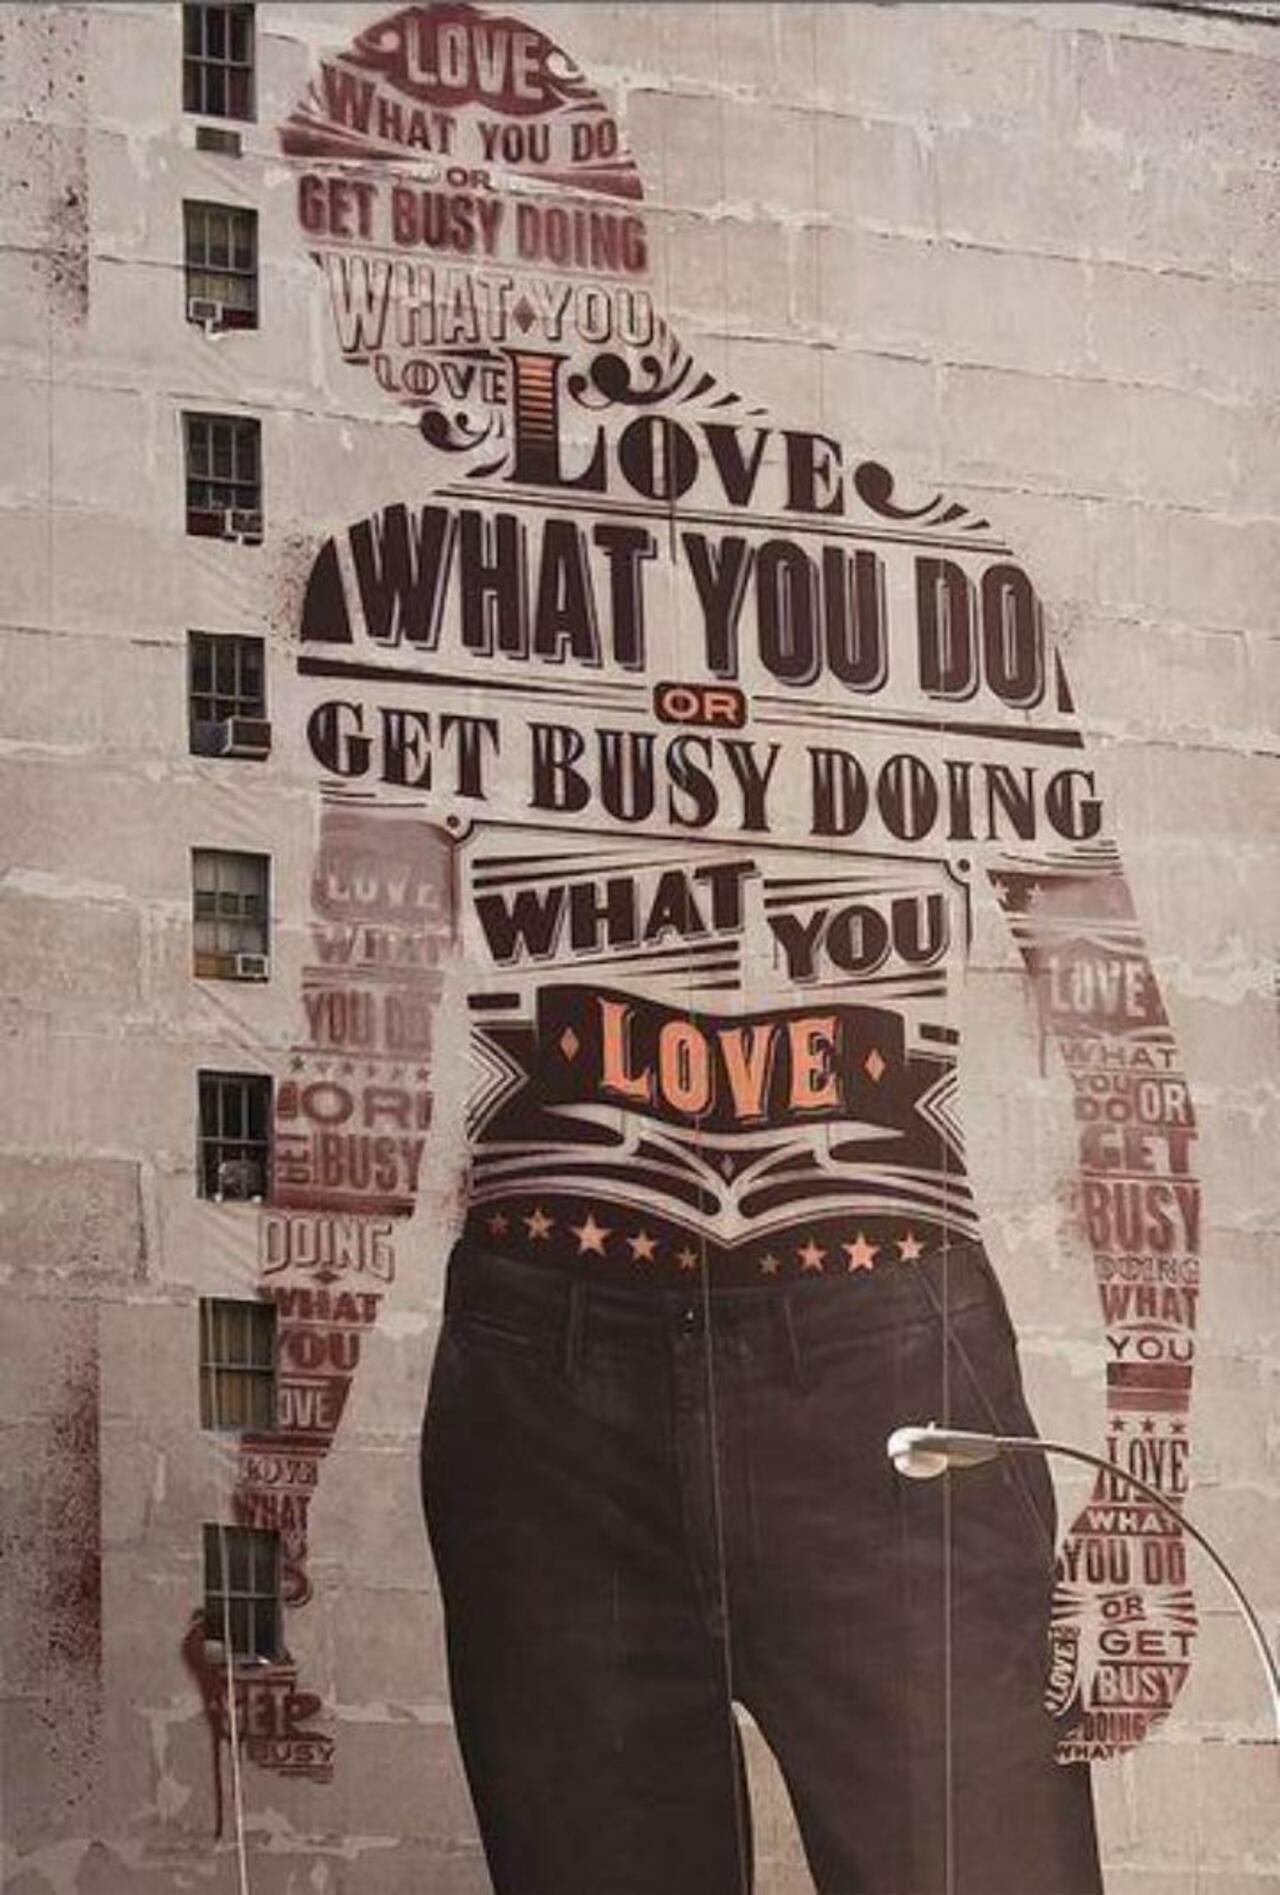 #love what you do or get #busy doing what you love
#art
#streetart
#graffiti
#mural
#urbanart ❤️ http://t.co/nzzjWmB2Xn